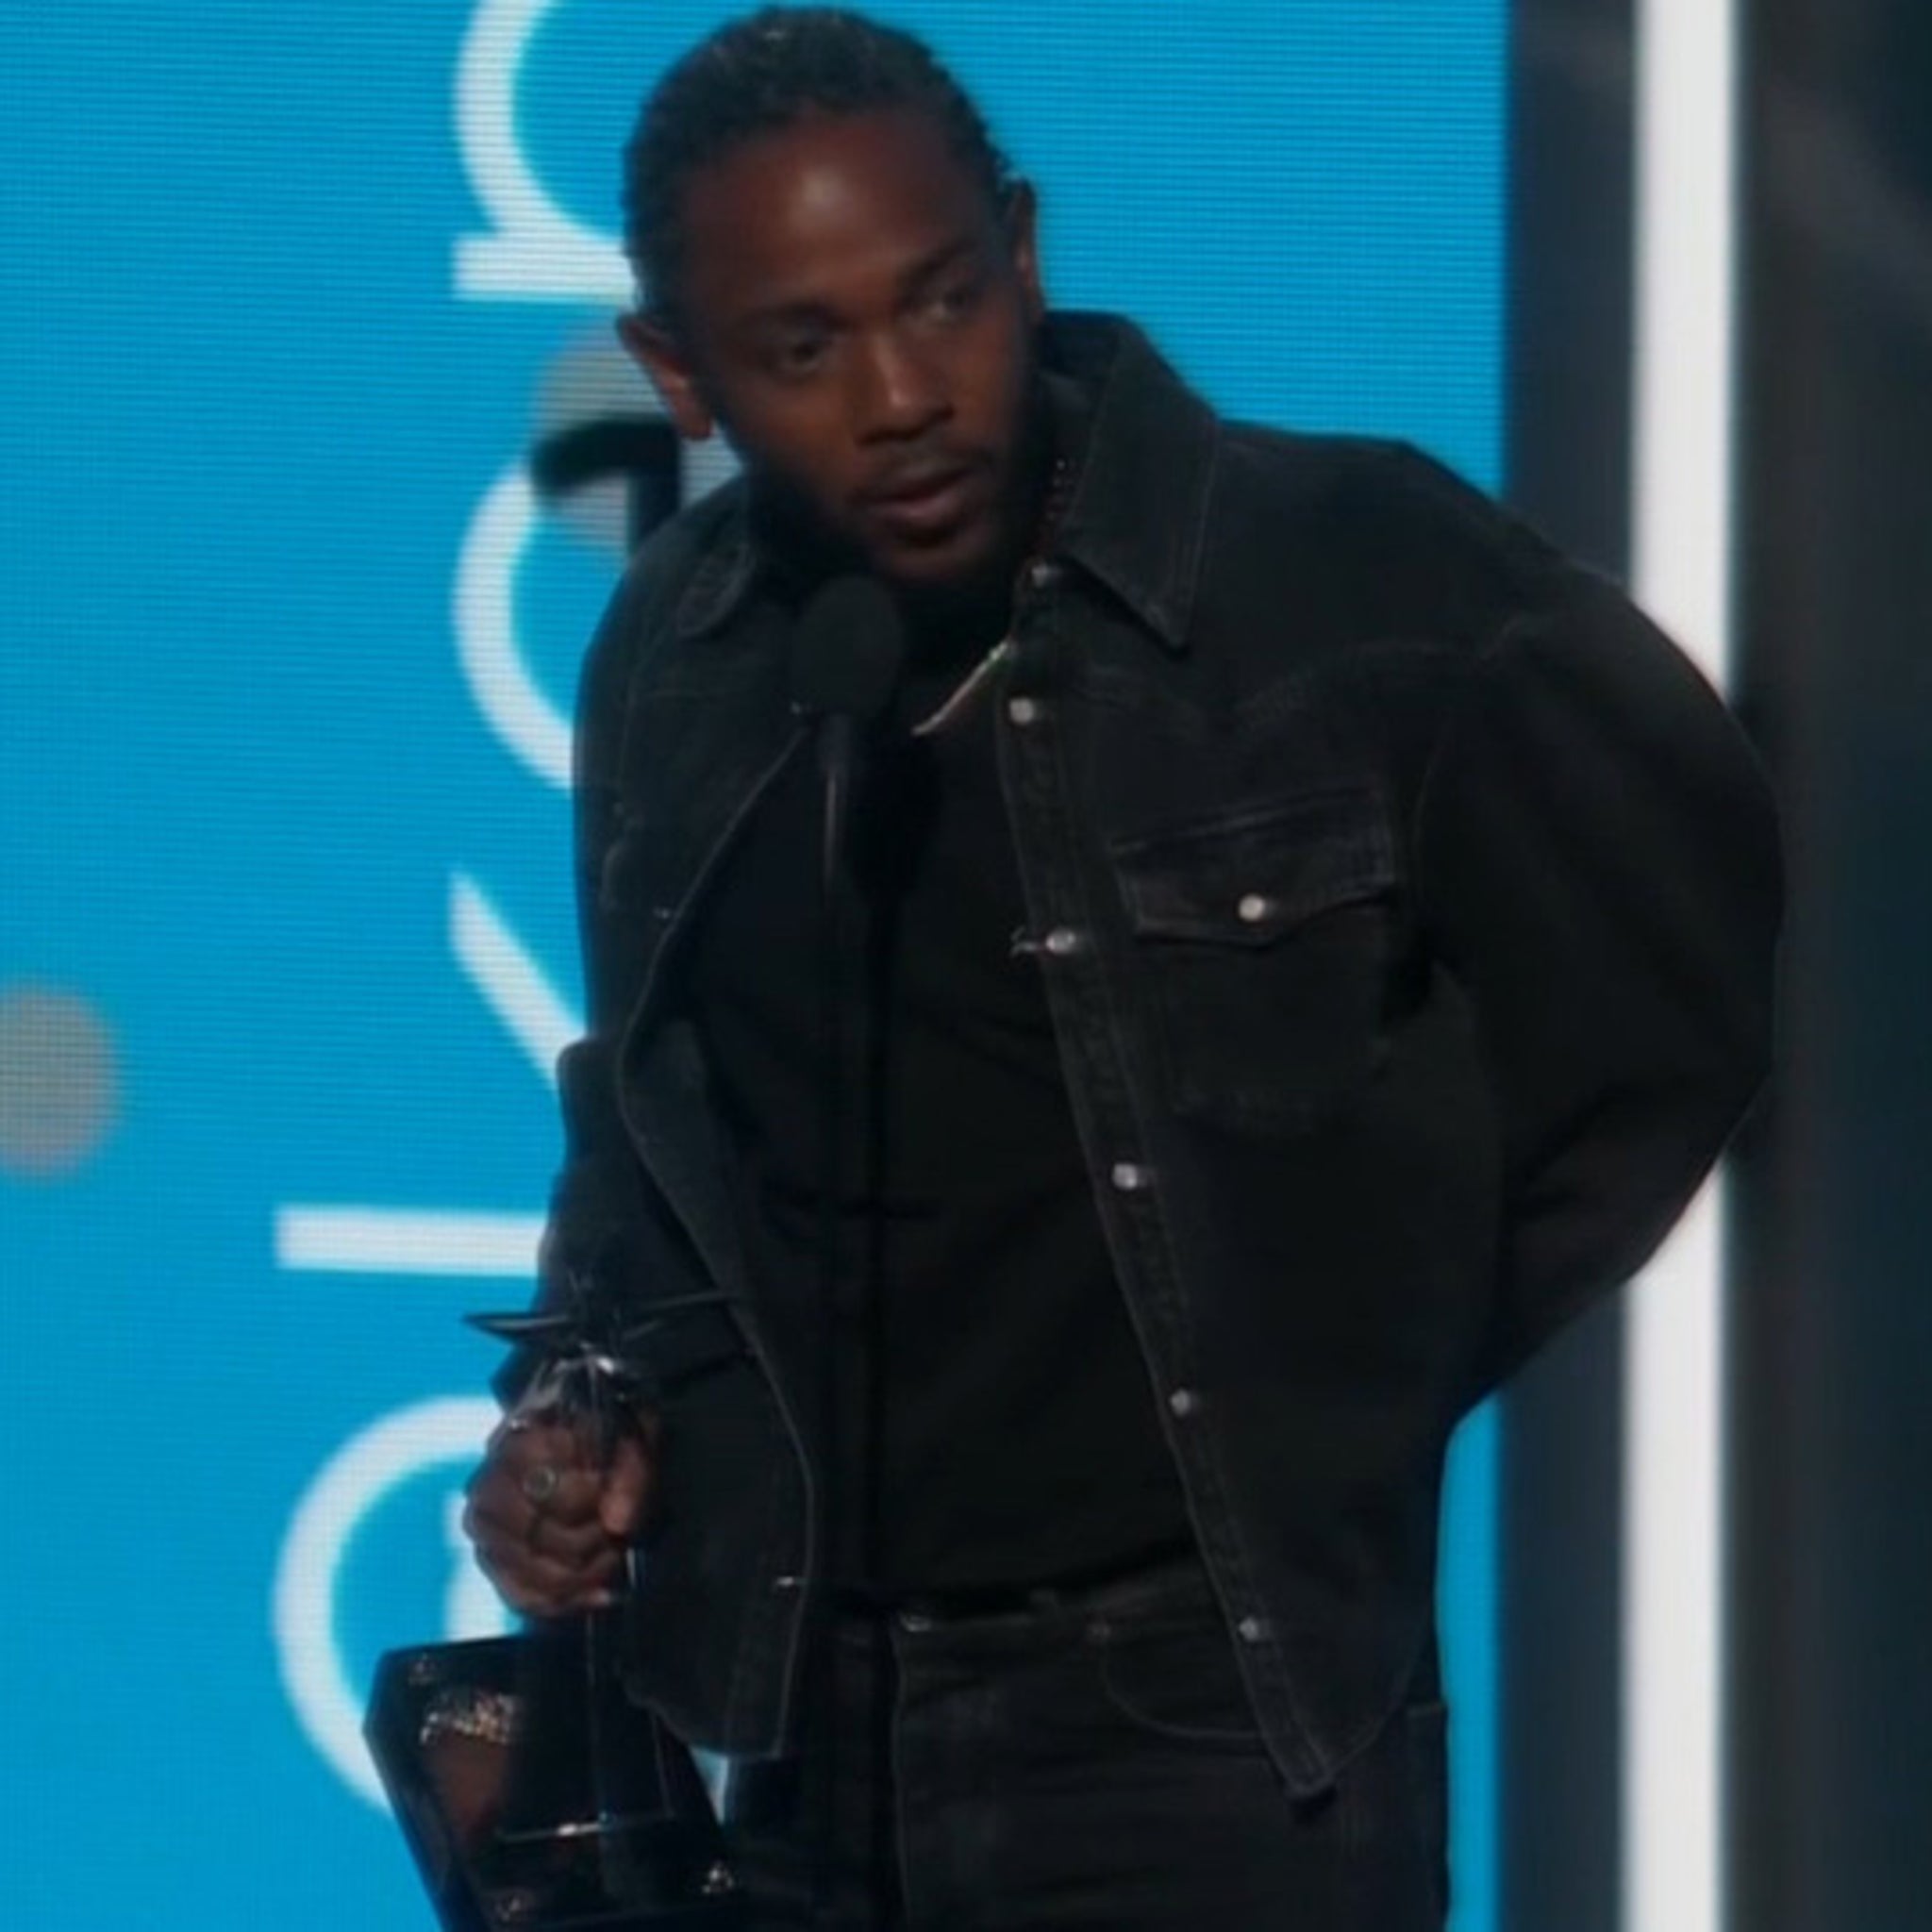 Kendrick Lamar triumphs at 2022 BET Awards – myTalk 107.1